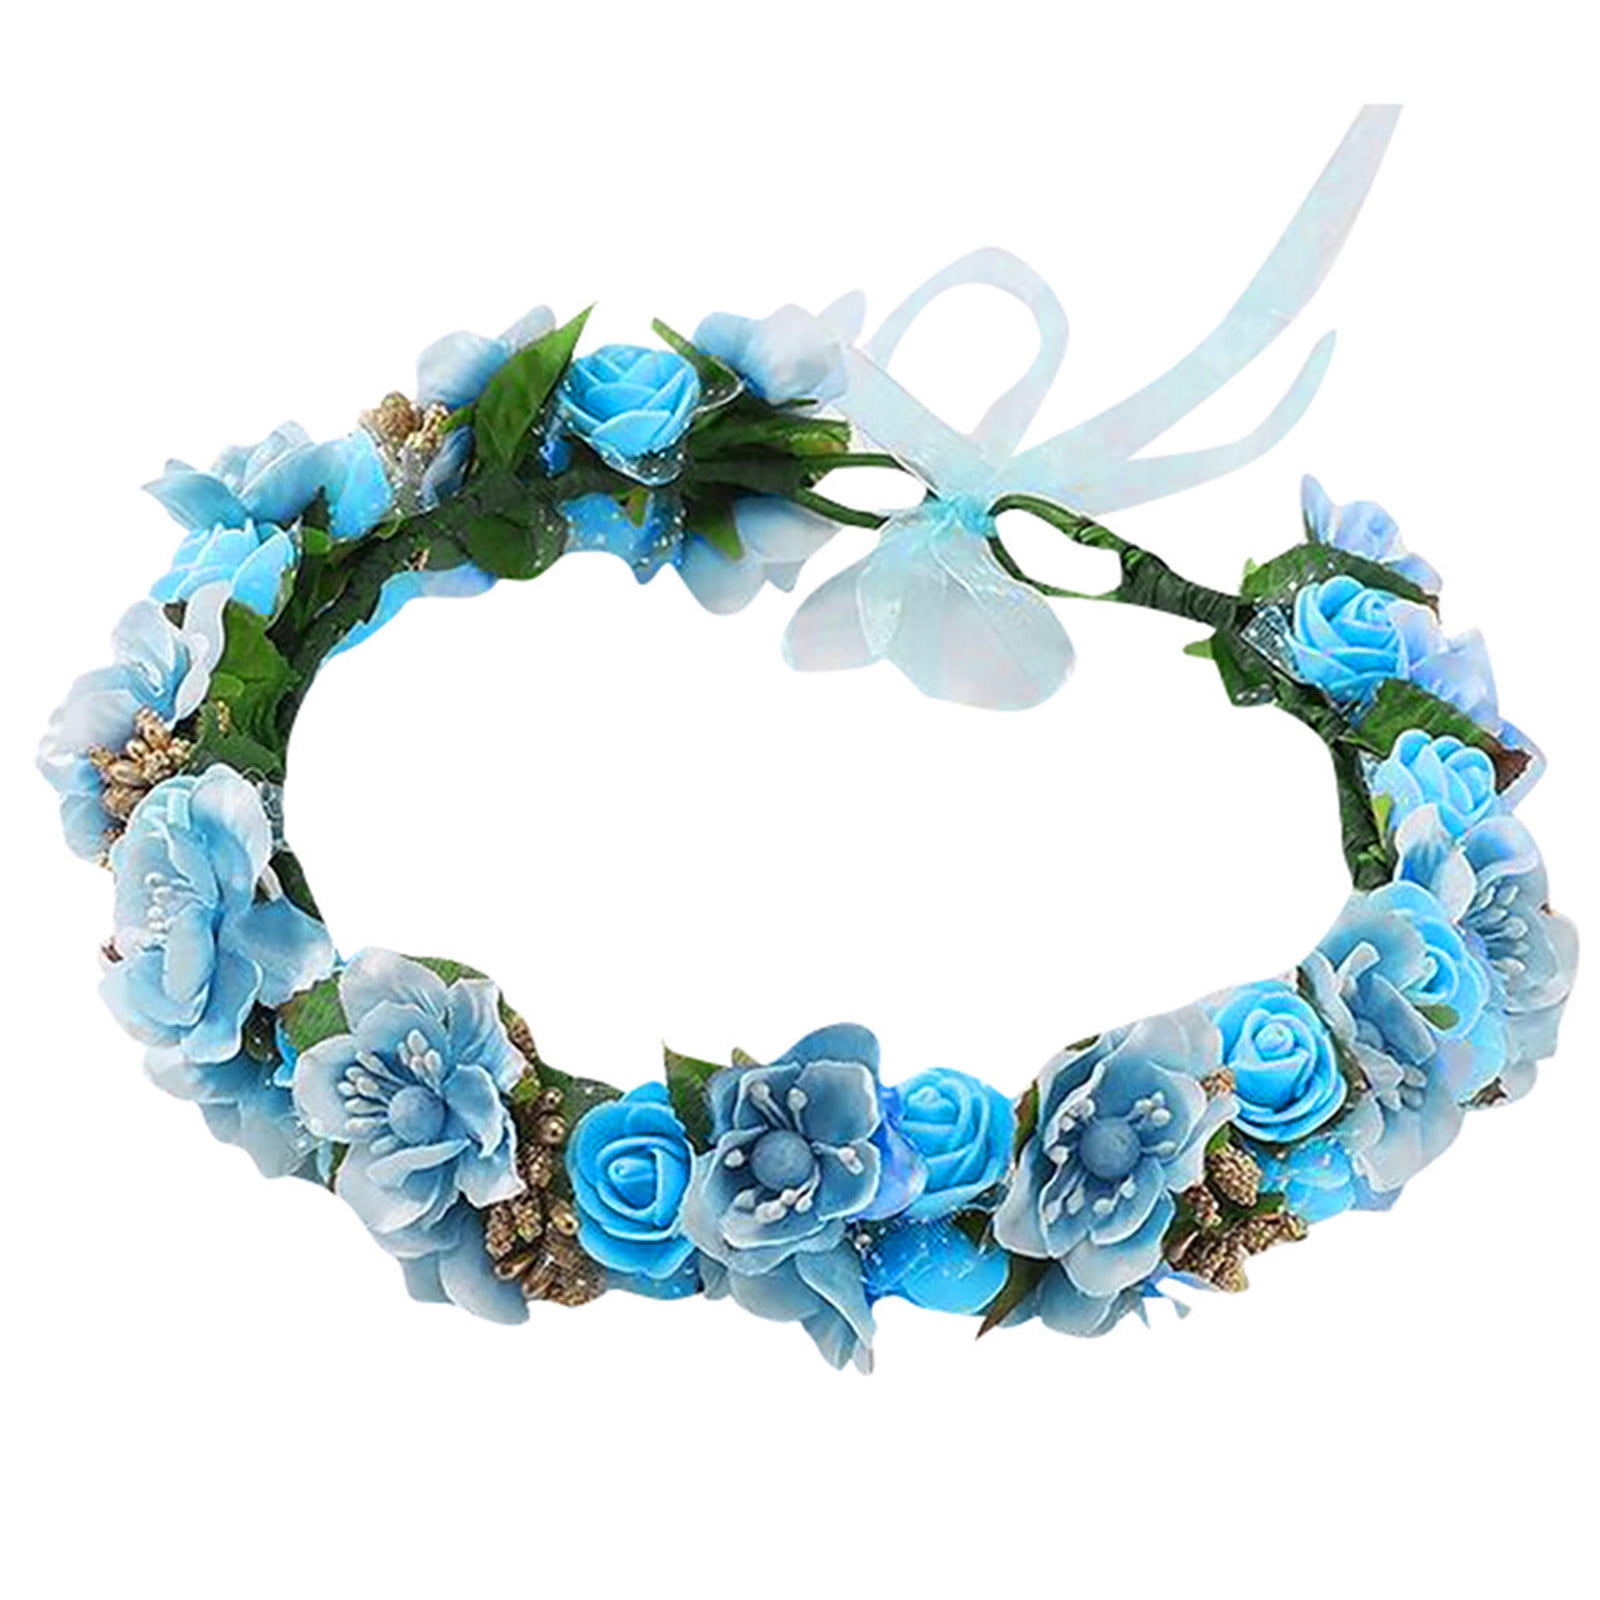 Details about  / Bridesmaid Hair Flower Headbands Garland Rustic Crown Wedding Hair Accessories